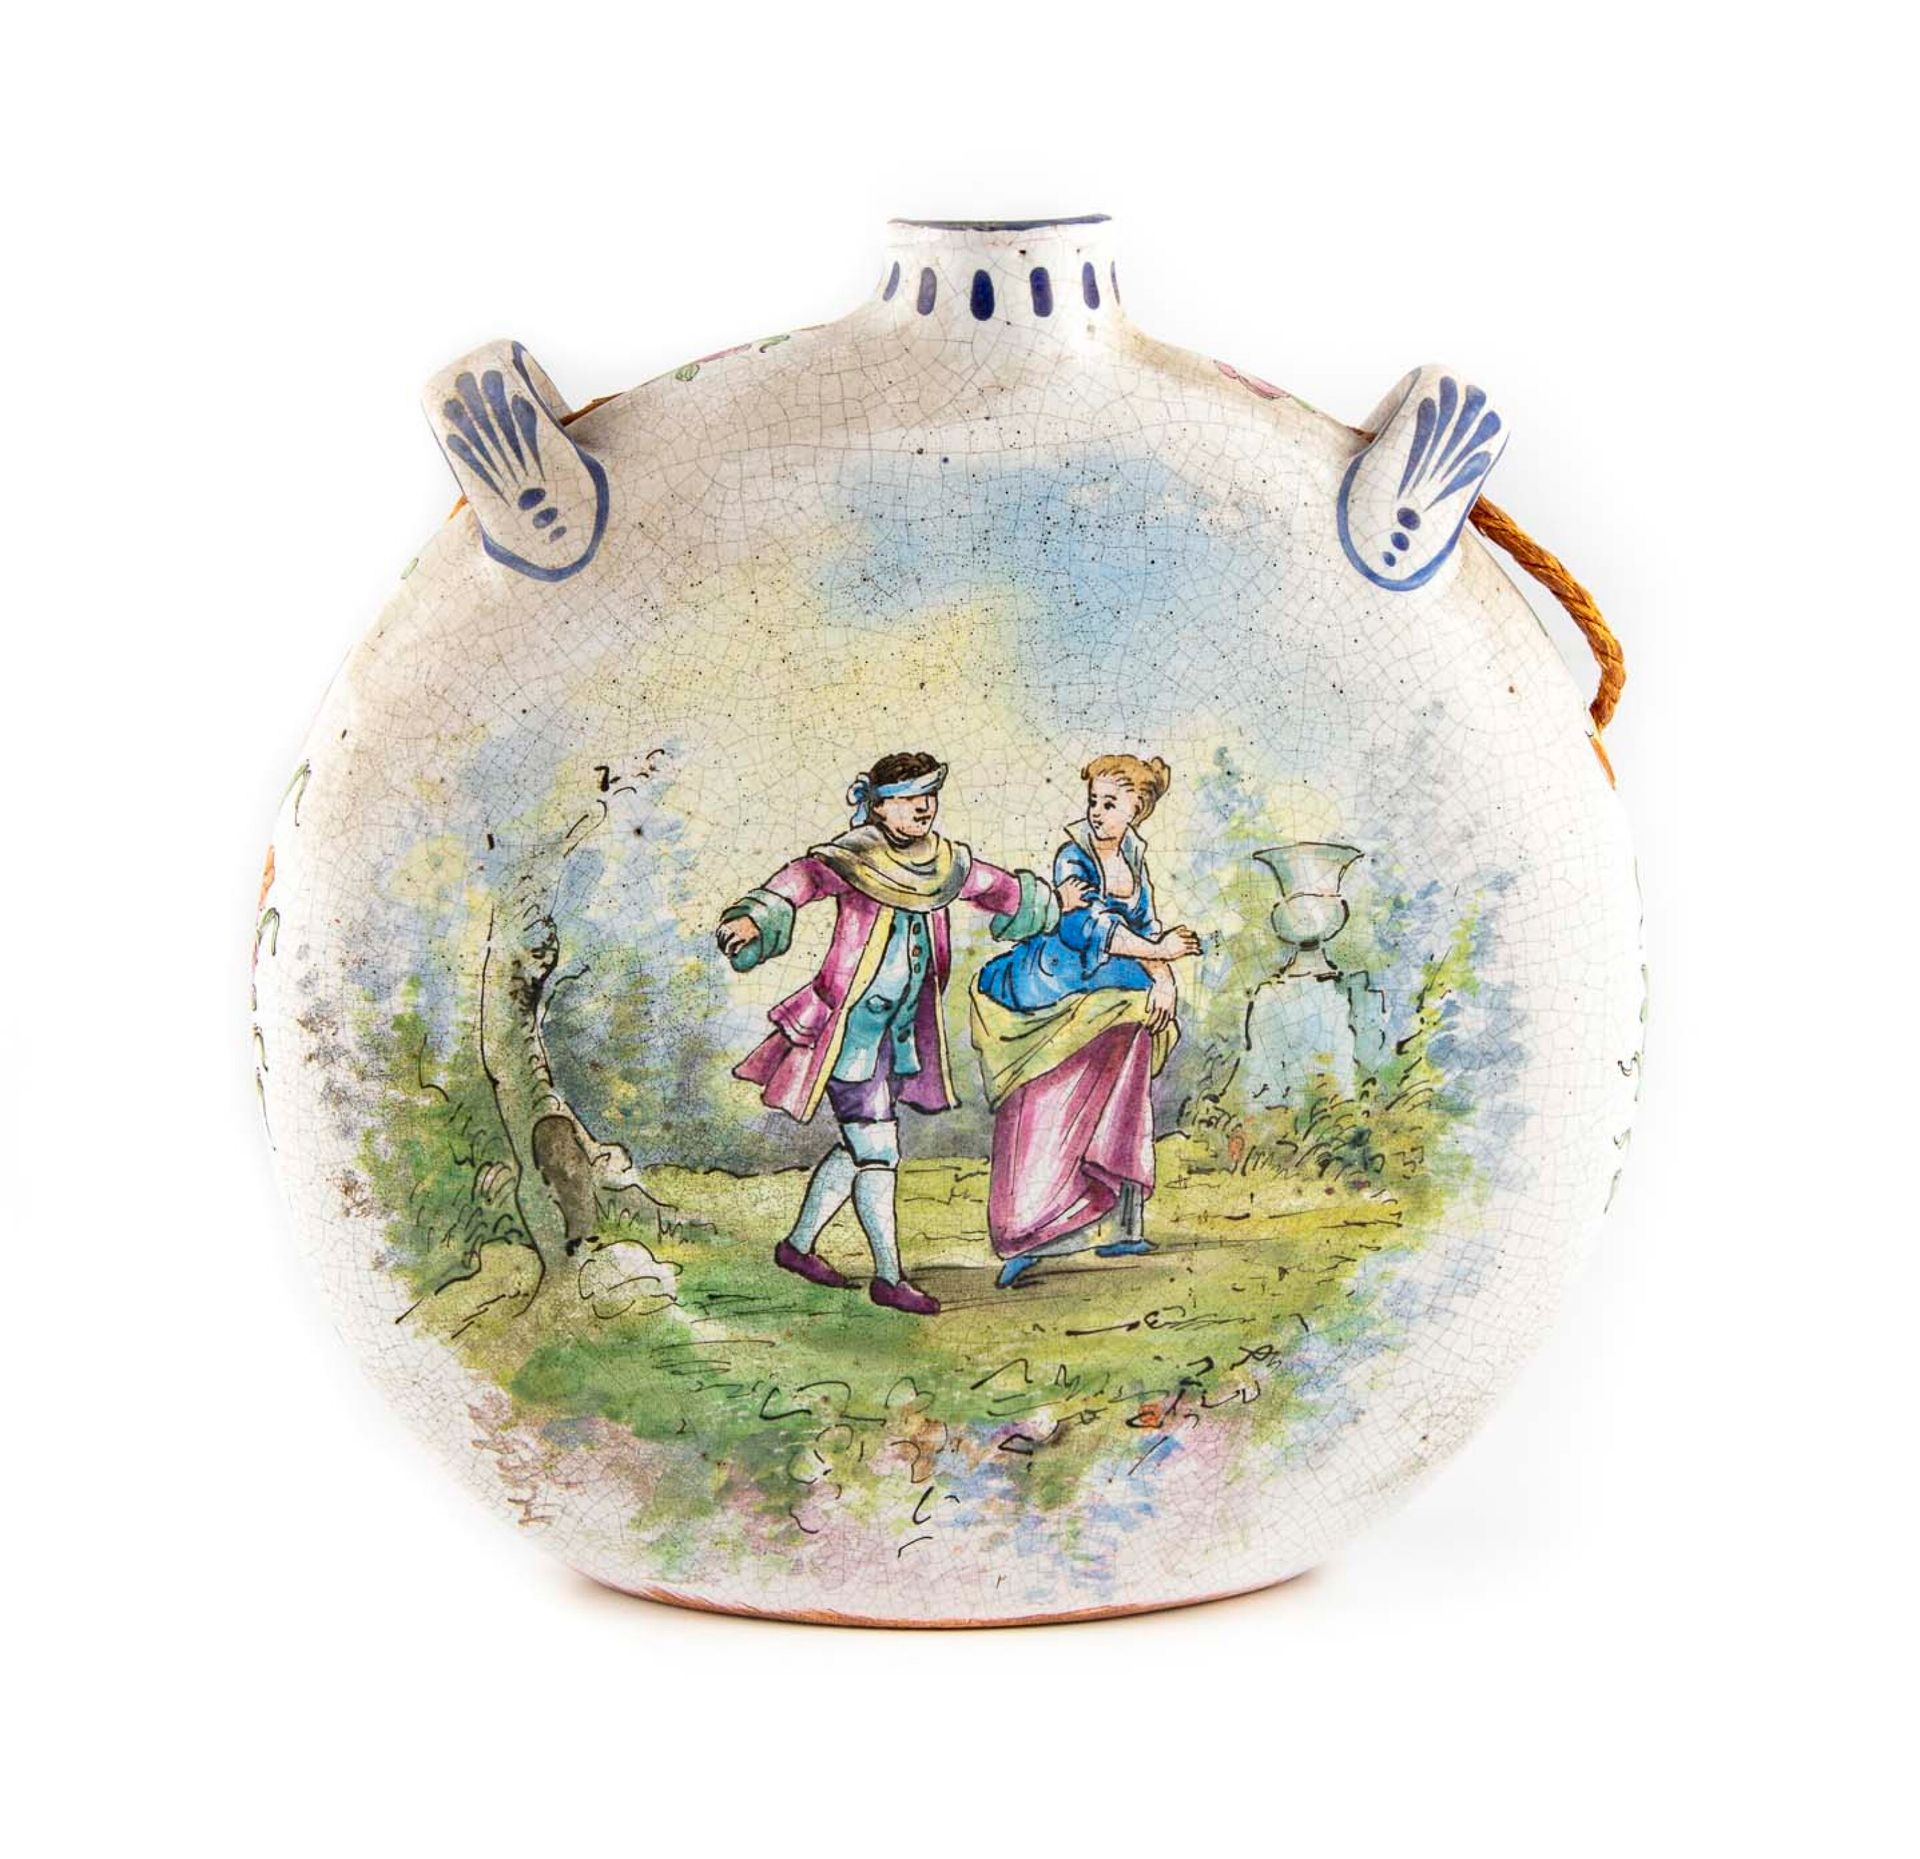 Null 陶罐上有多色装饰的一对夫妇在玩科林-马亚尔和花束的图案

20世纪上半叶

H.19厘米